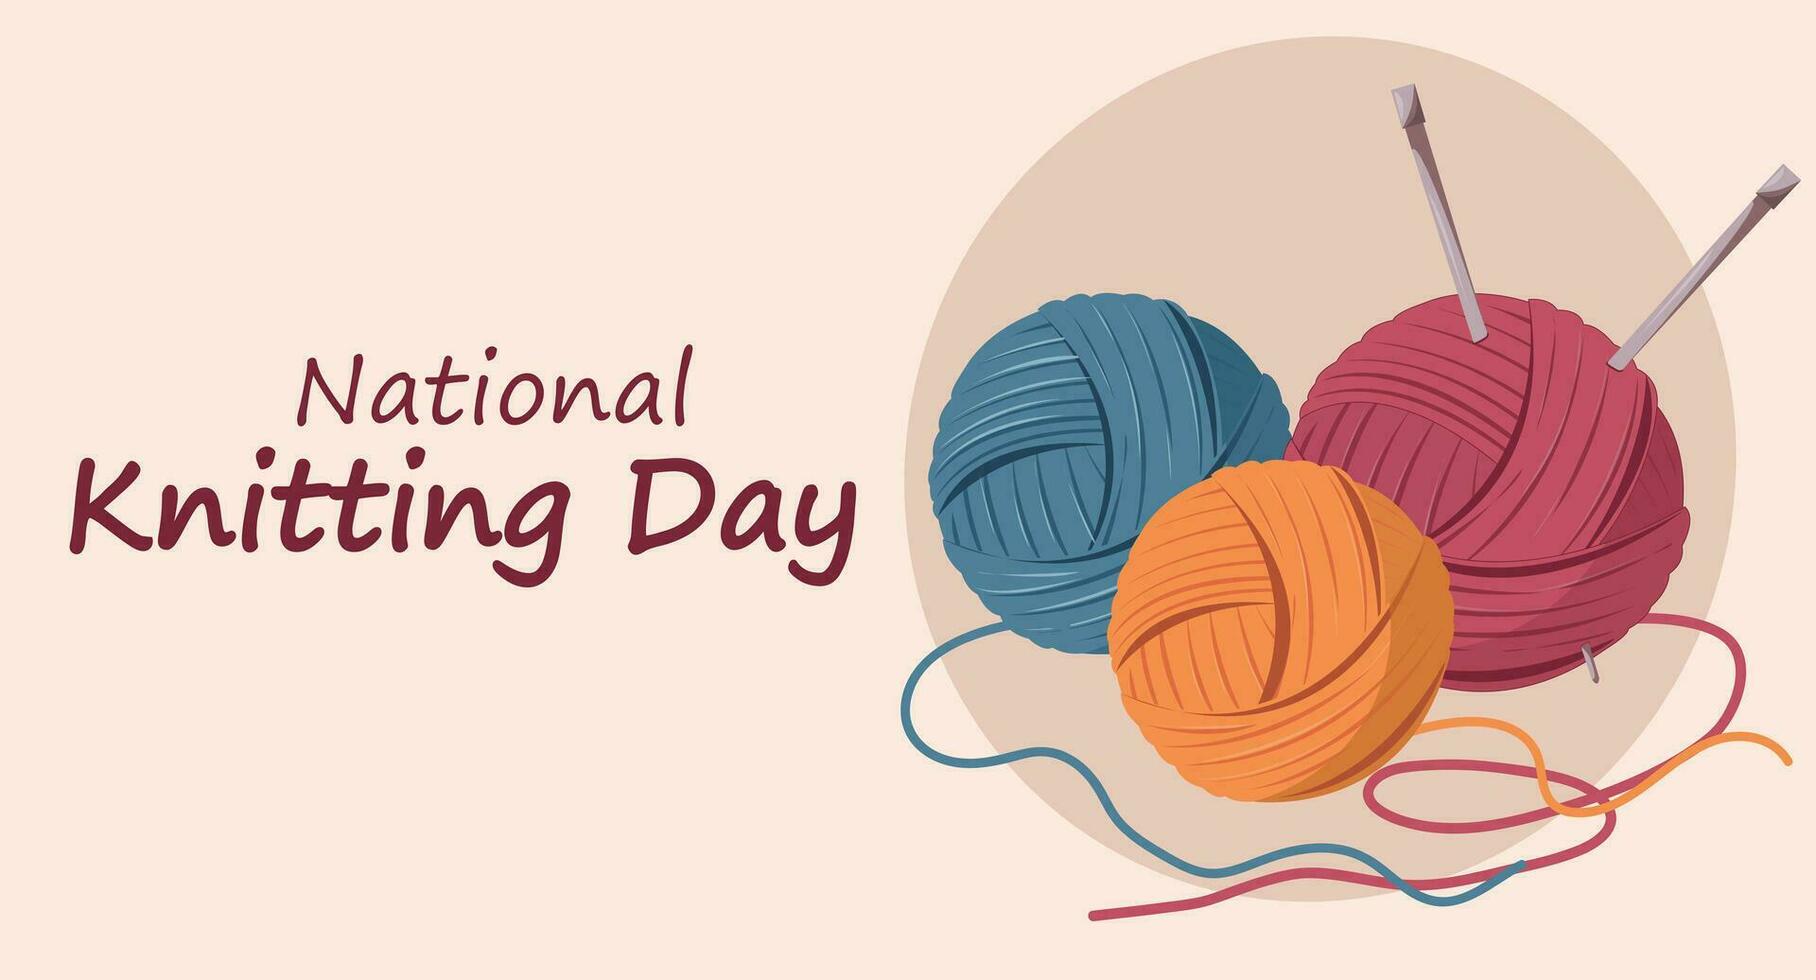 National Knitting Day card. Knitting yarn color balls with needles. Cozy crafting hobby. Knitting.Flat cartoon illustration vector